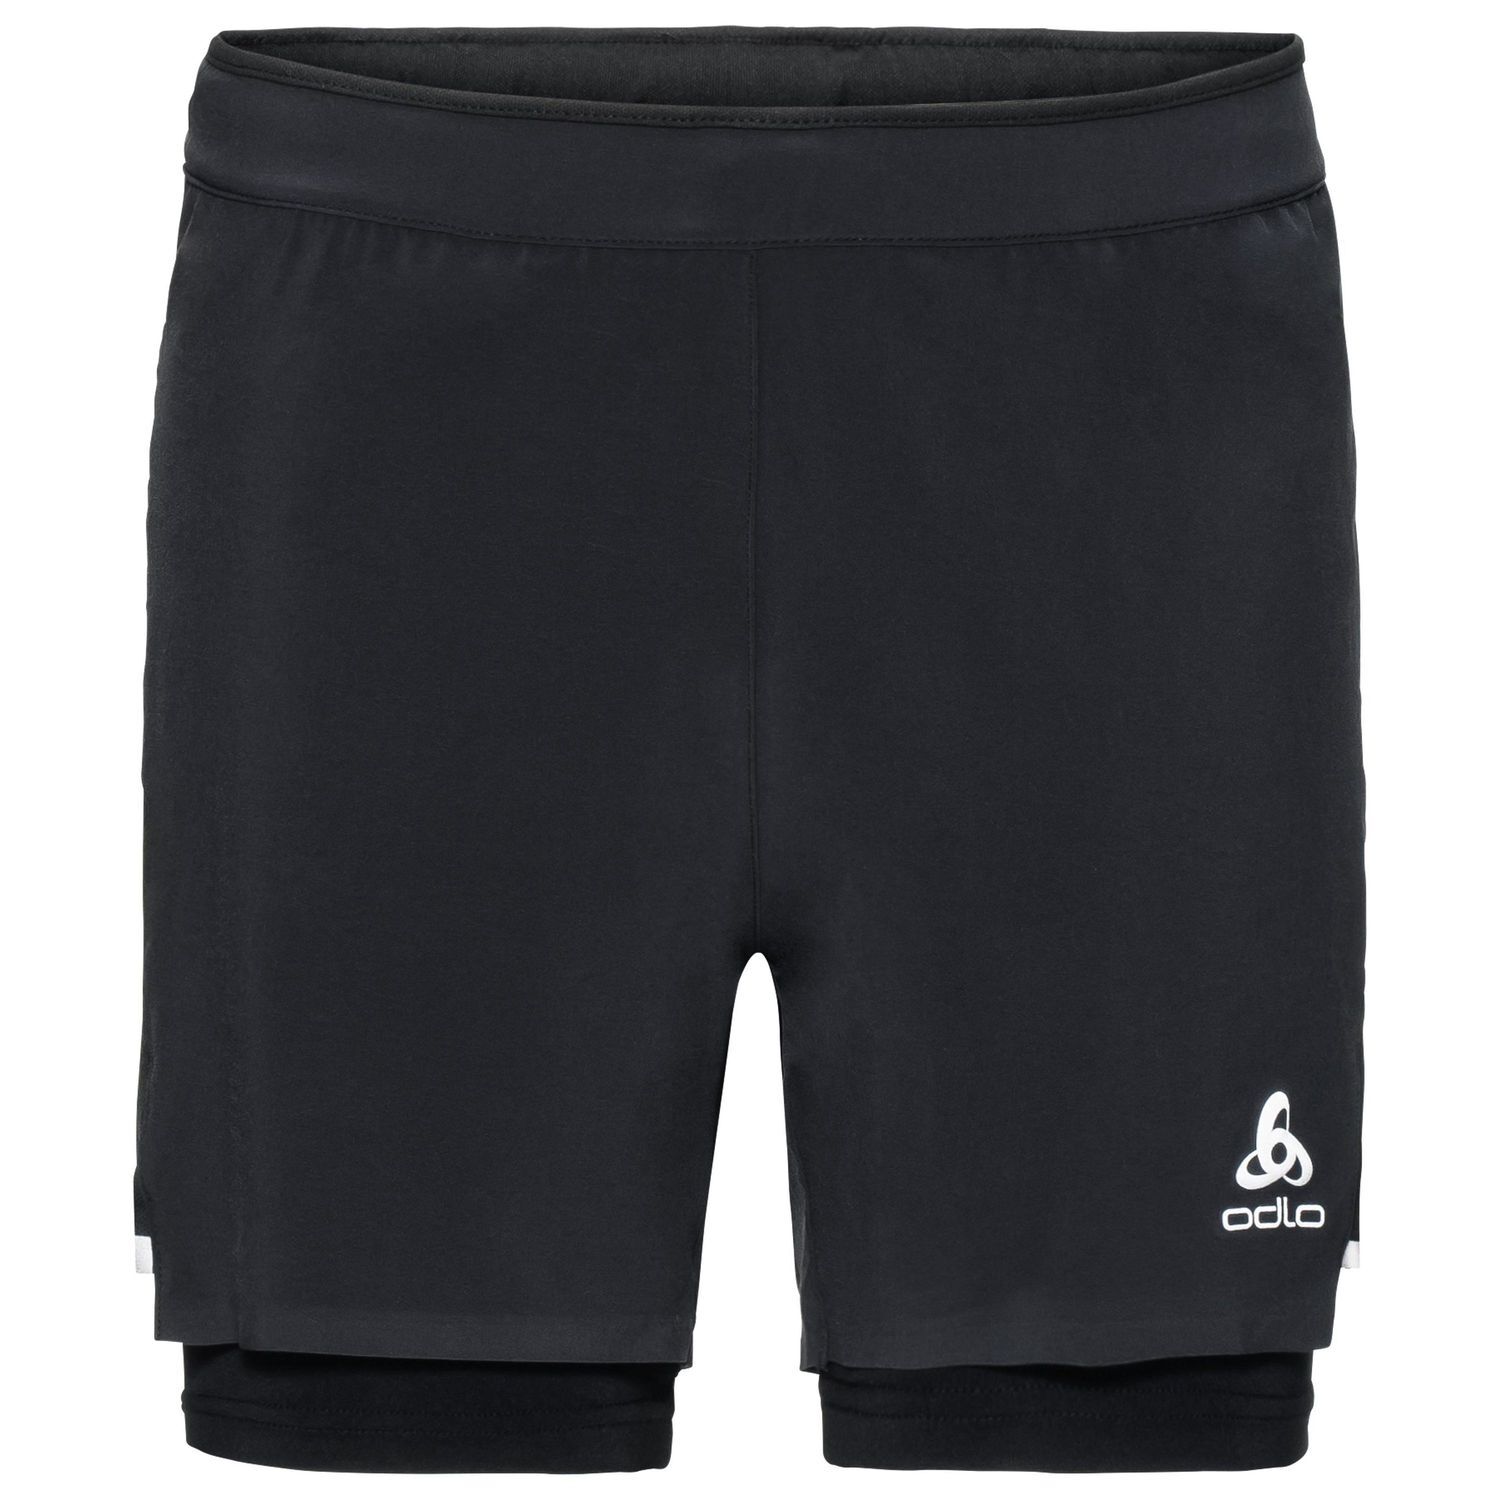 Odlo - 2-In-1 Shorts Zeroweight Ceramicool - Shorts - Men's